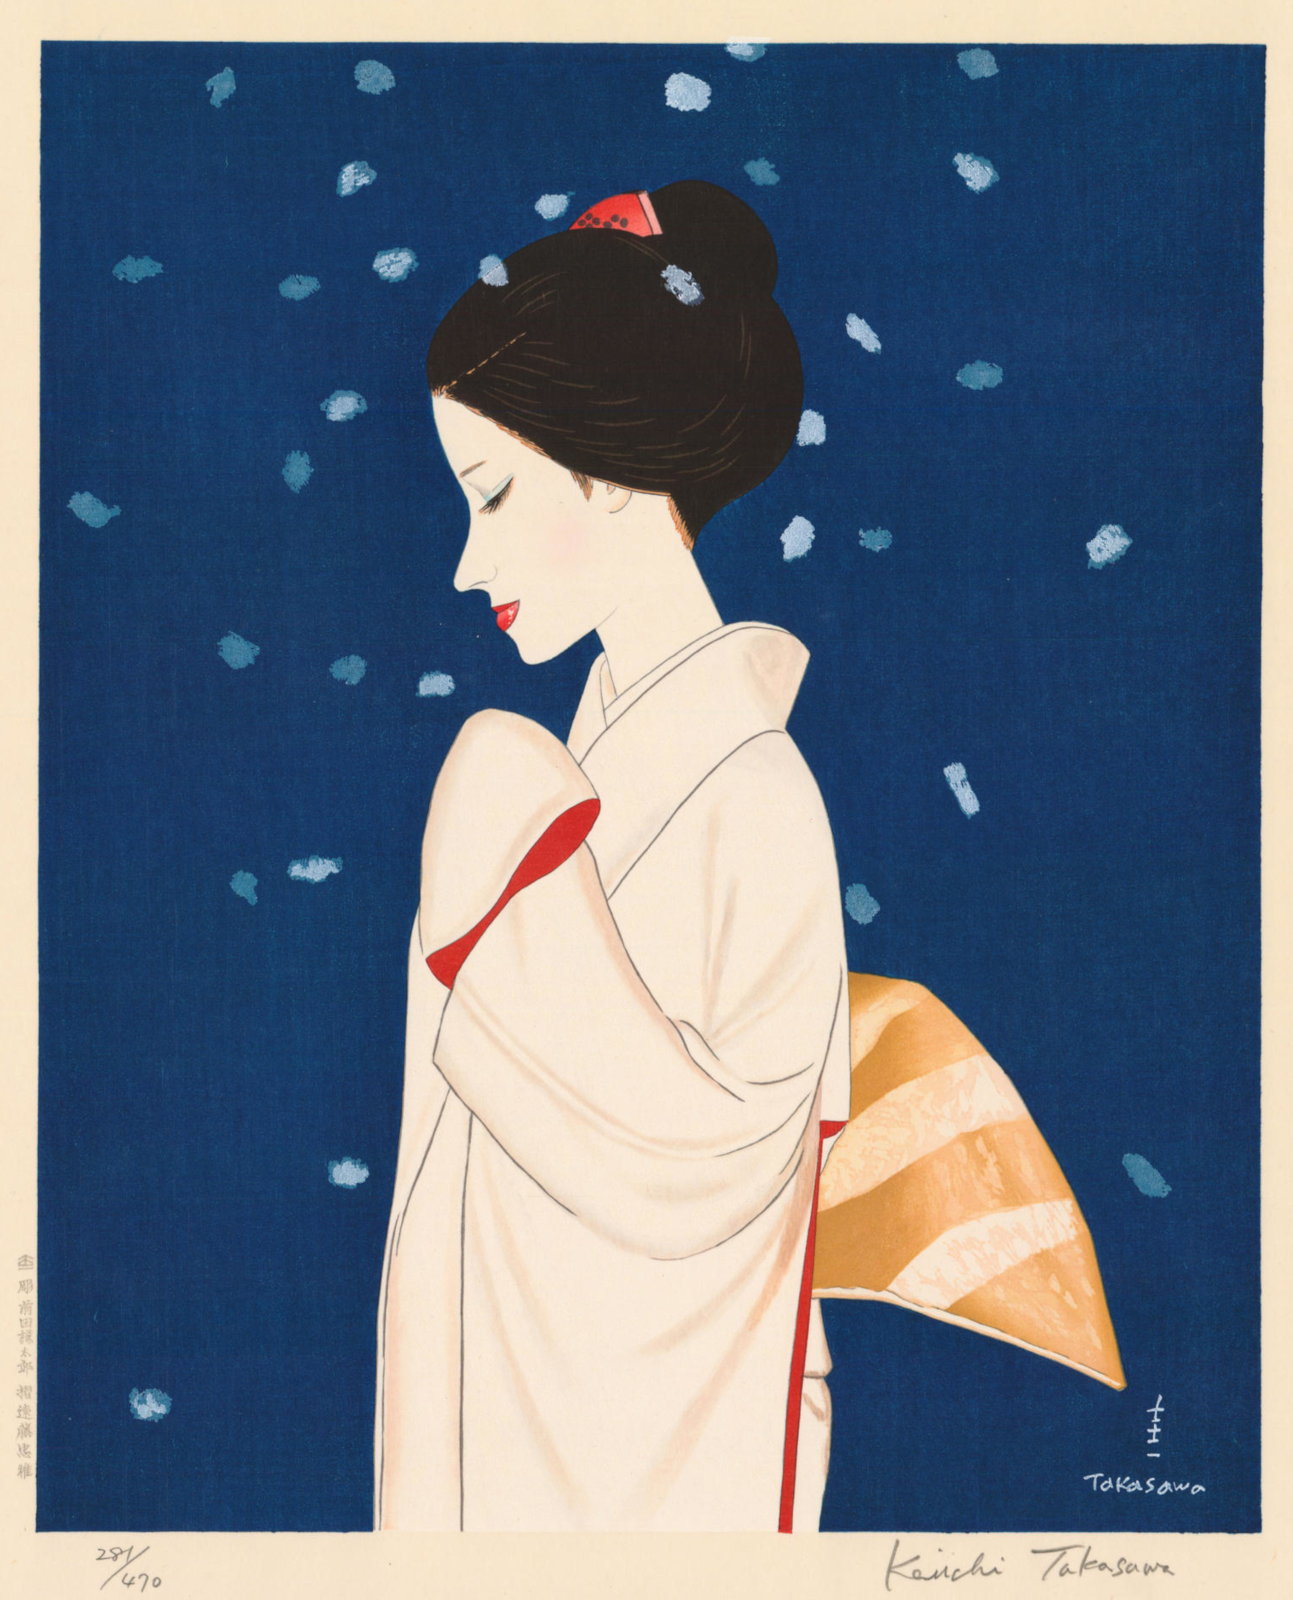 Takasawa Keiichi Catalogue - Peony Snow woodblock print